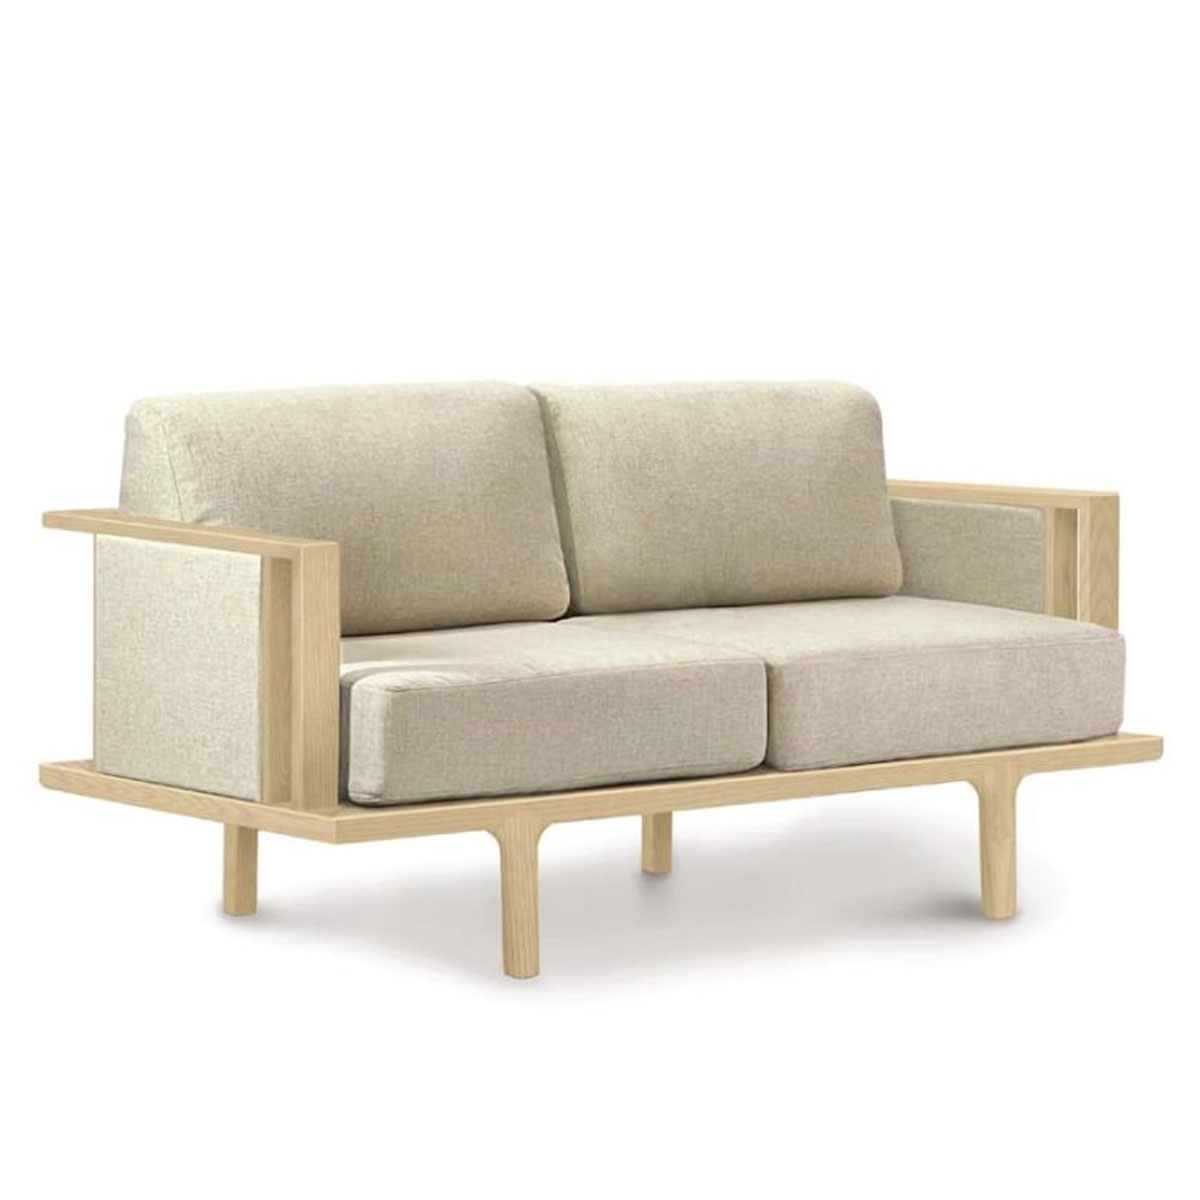 Copeland Sierra Loveseat with Upholstered Panels in Oak